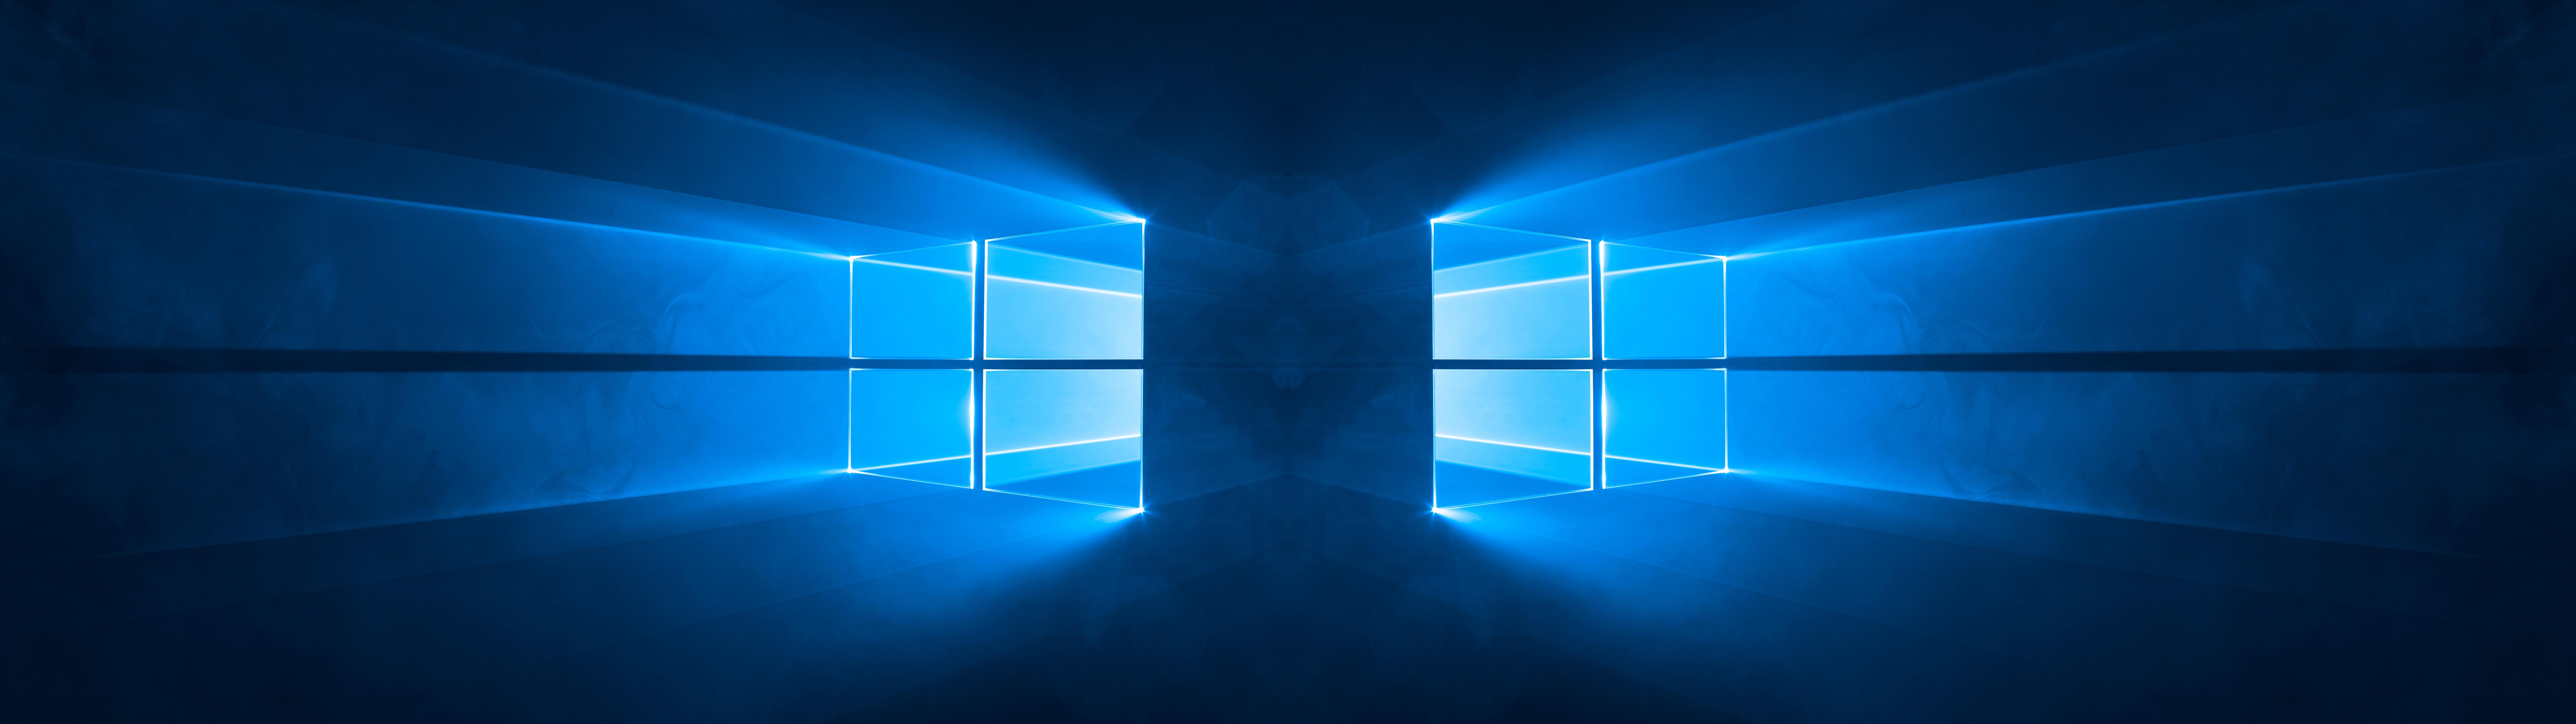 Windows 10 Dual Monitor Wallpapers - Top Free Windows 10 Dual Monitor Backgrounds - Wallpaperaccess